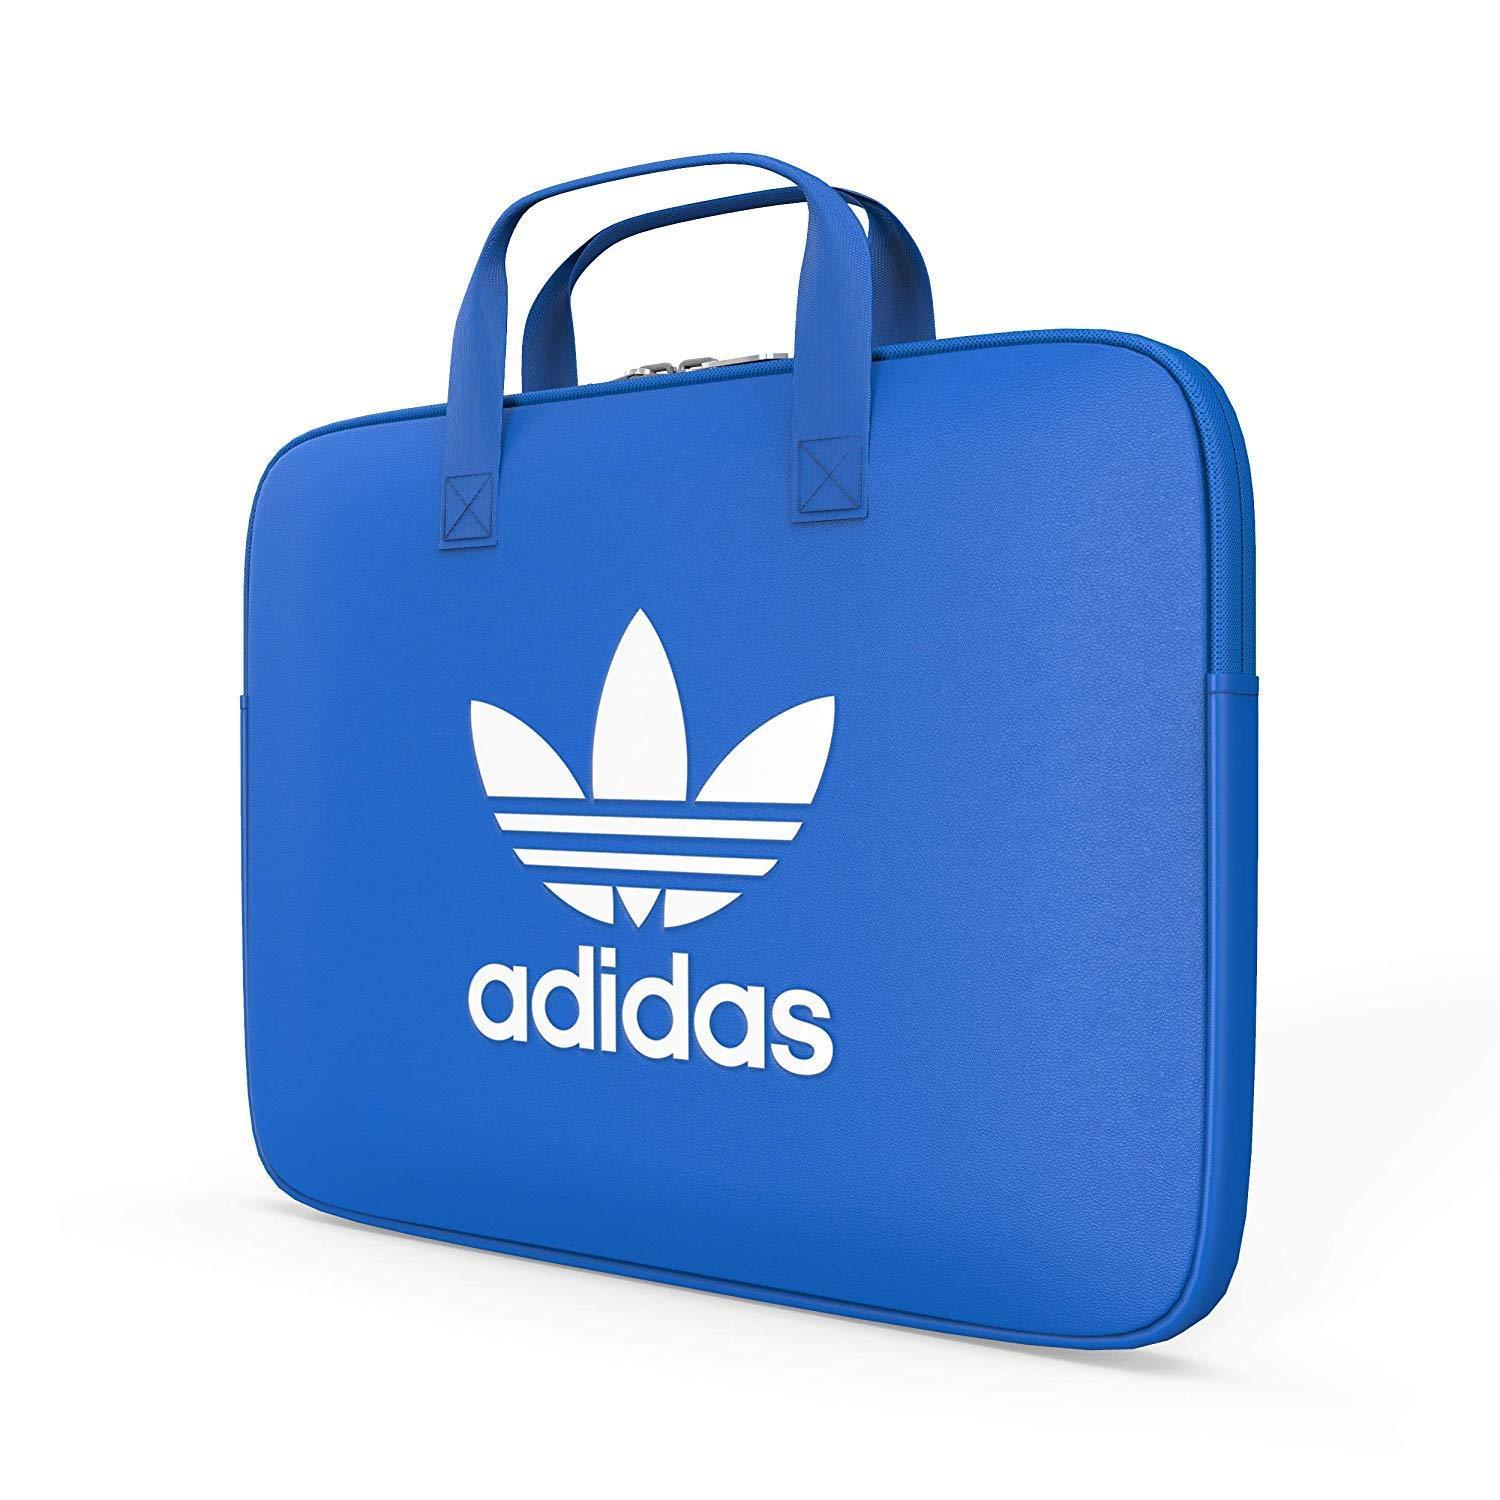 adidas laptop sleeve bag 13 inch ss19 blue